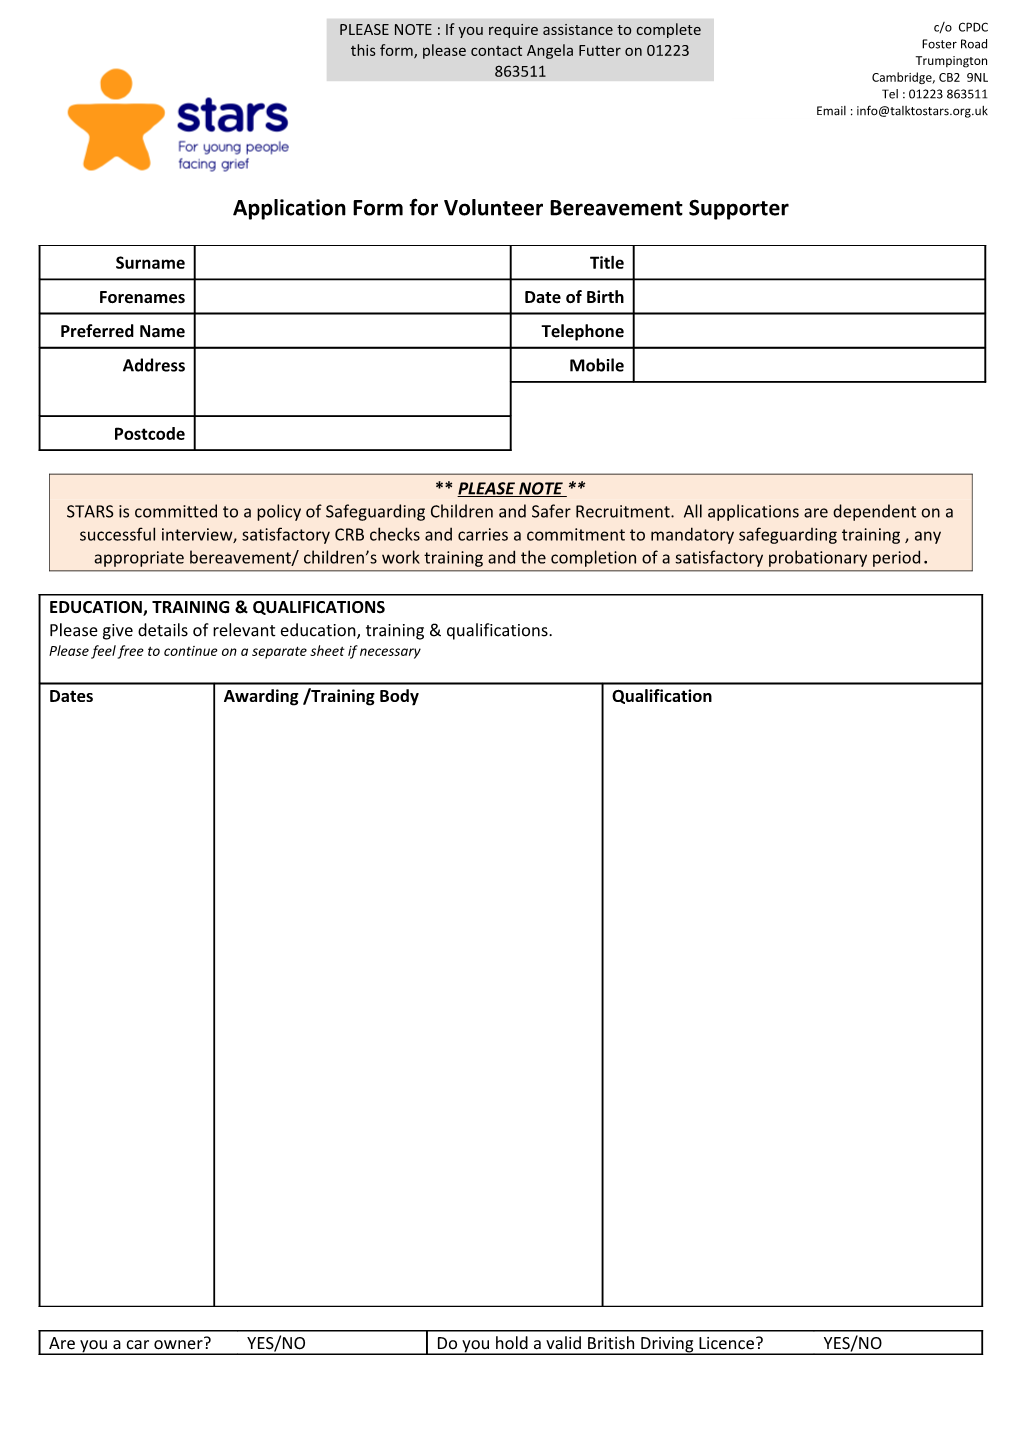 Application Form for Volunteer Bereavement Supporter